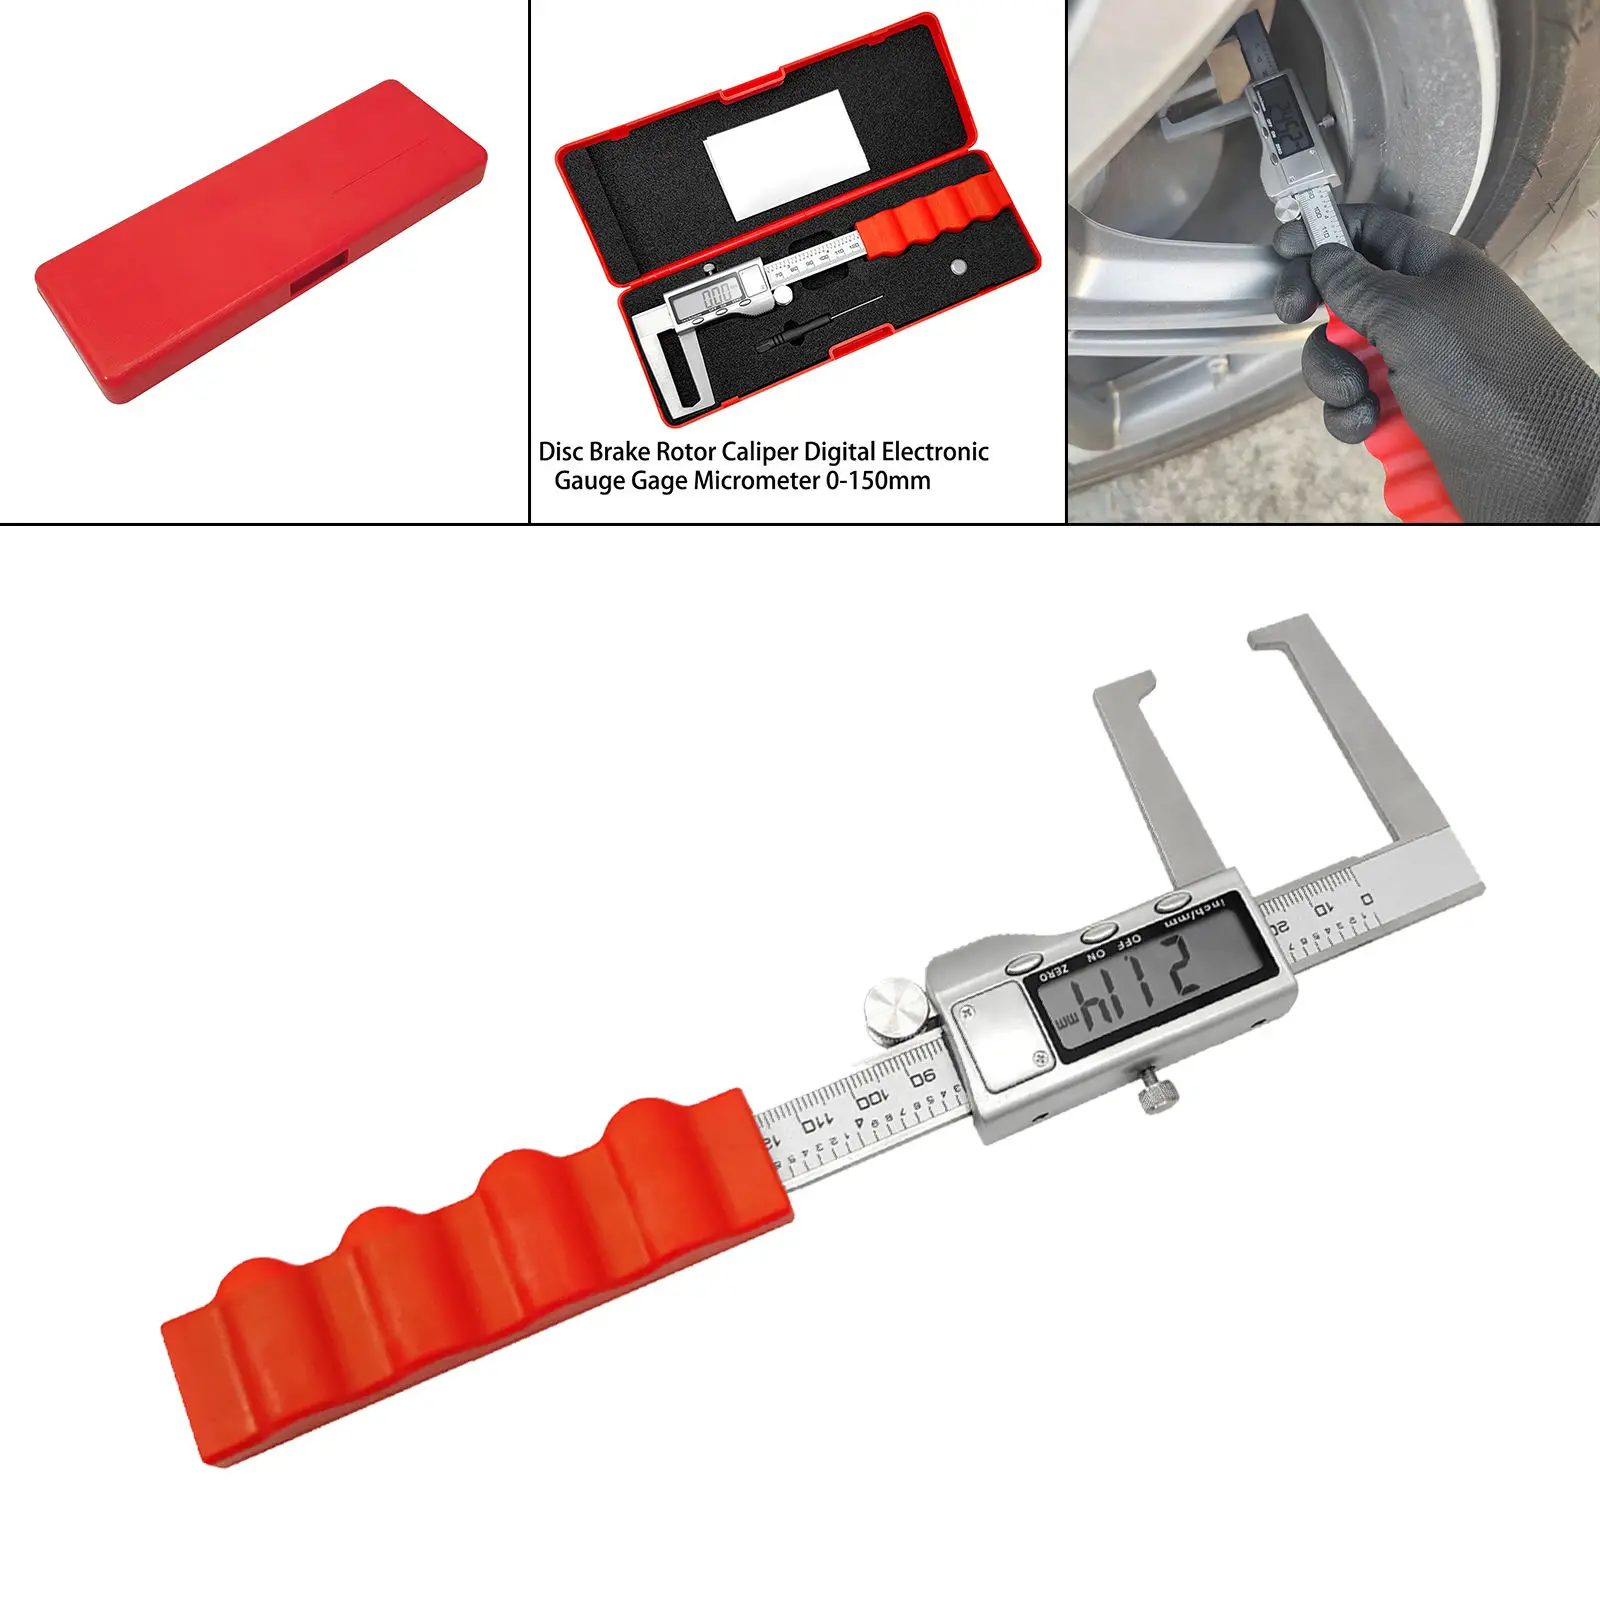 Brake Discs Vernier Caliper Electronic Gauge Gage Micrometer 0-150mm